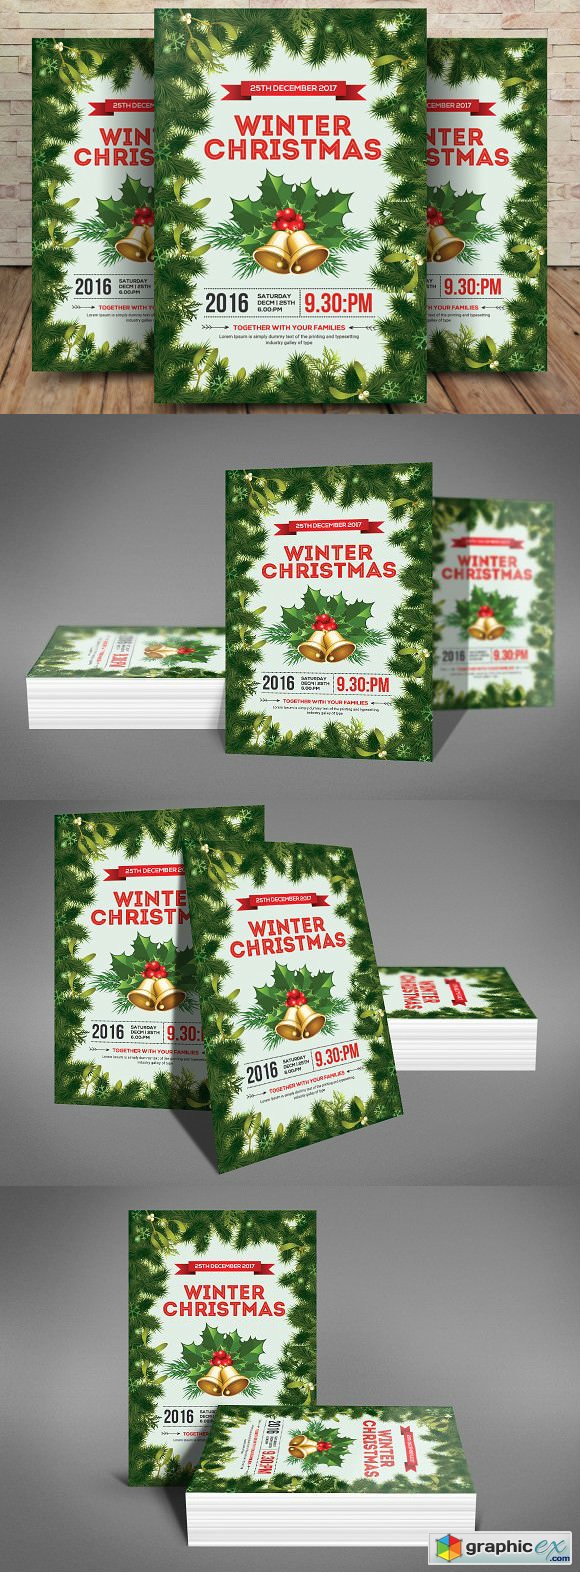 Christmas Celebration & Winter Party 2019651